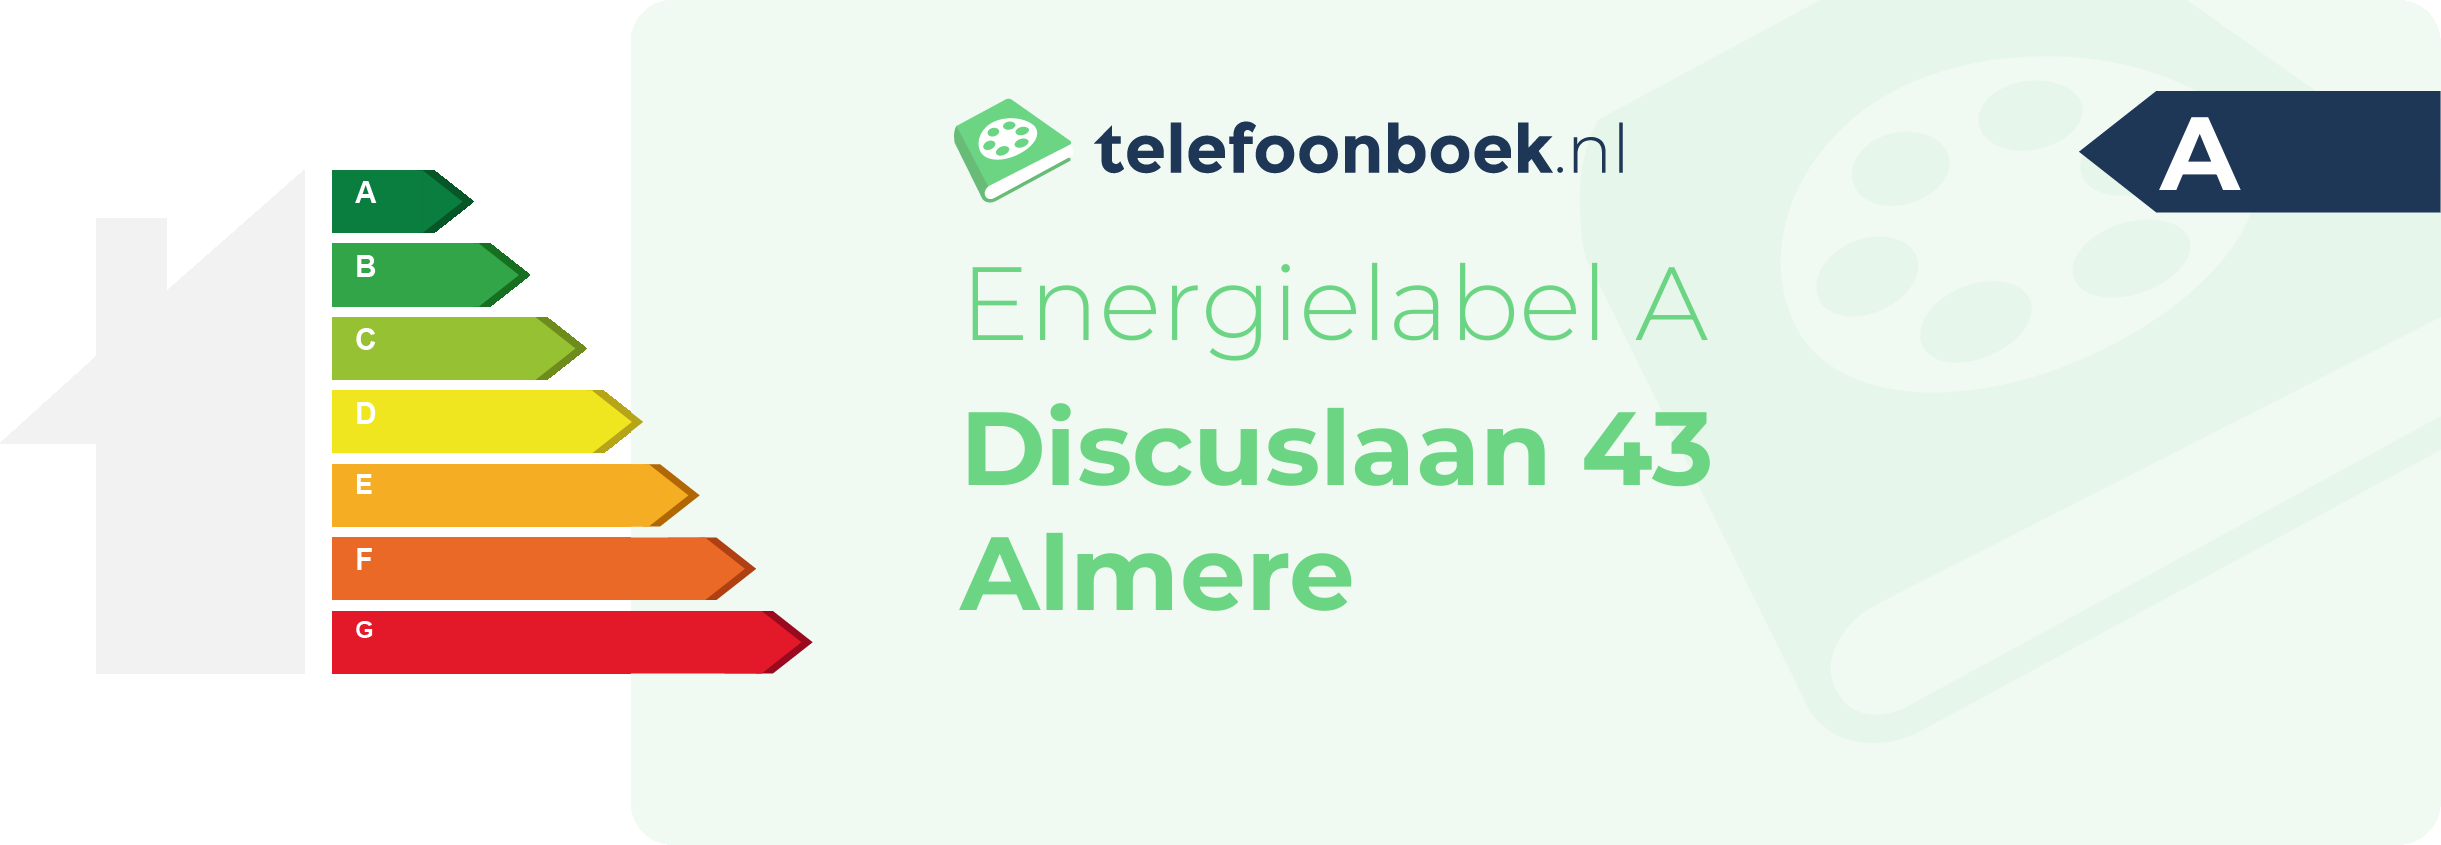 Energielabel Discuslaan 43 Almere